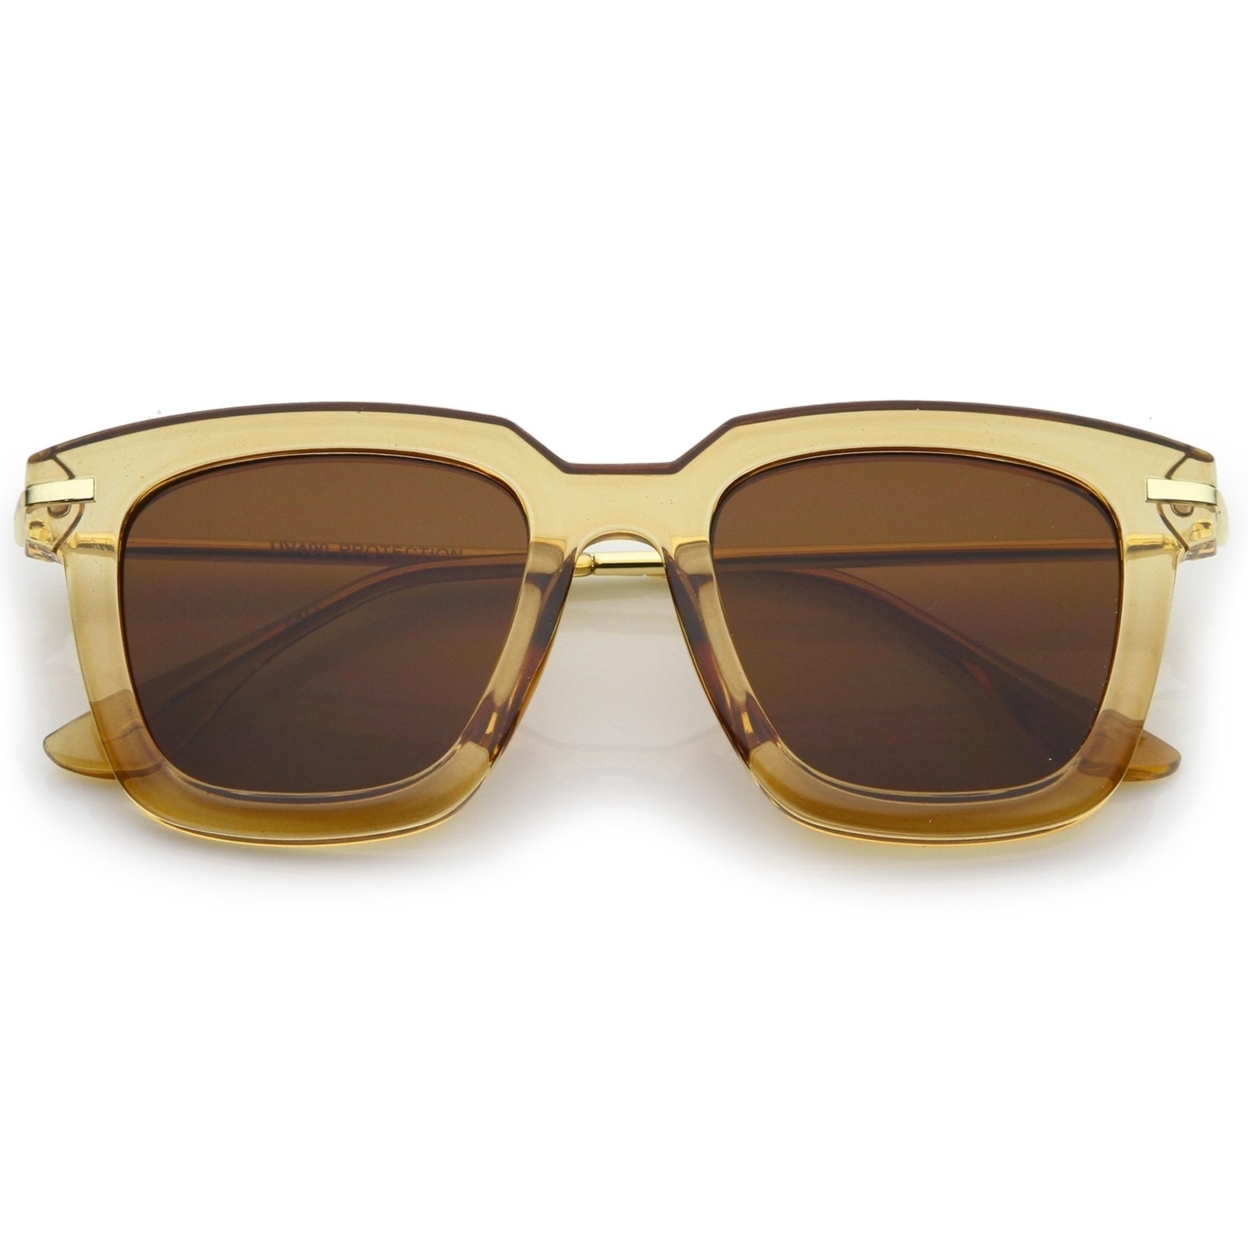 Oversize Slim Metal Temple Square Lens Horn Rimmed Sunglasses 50mm - Smoke-Gold / Smoke